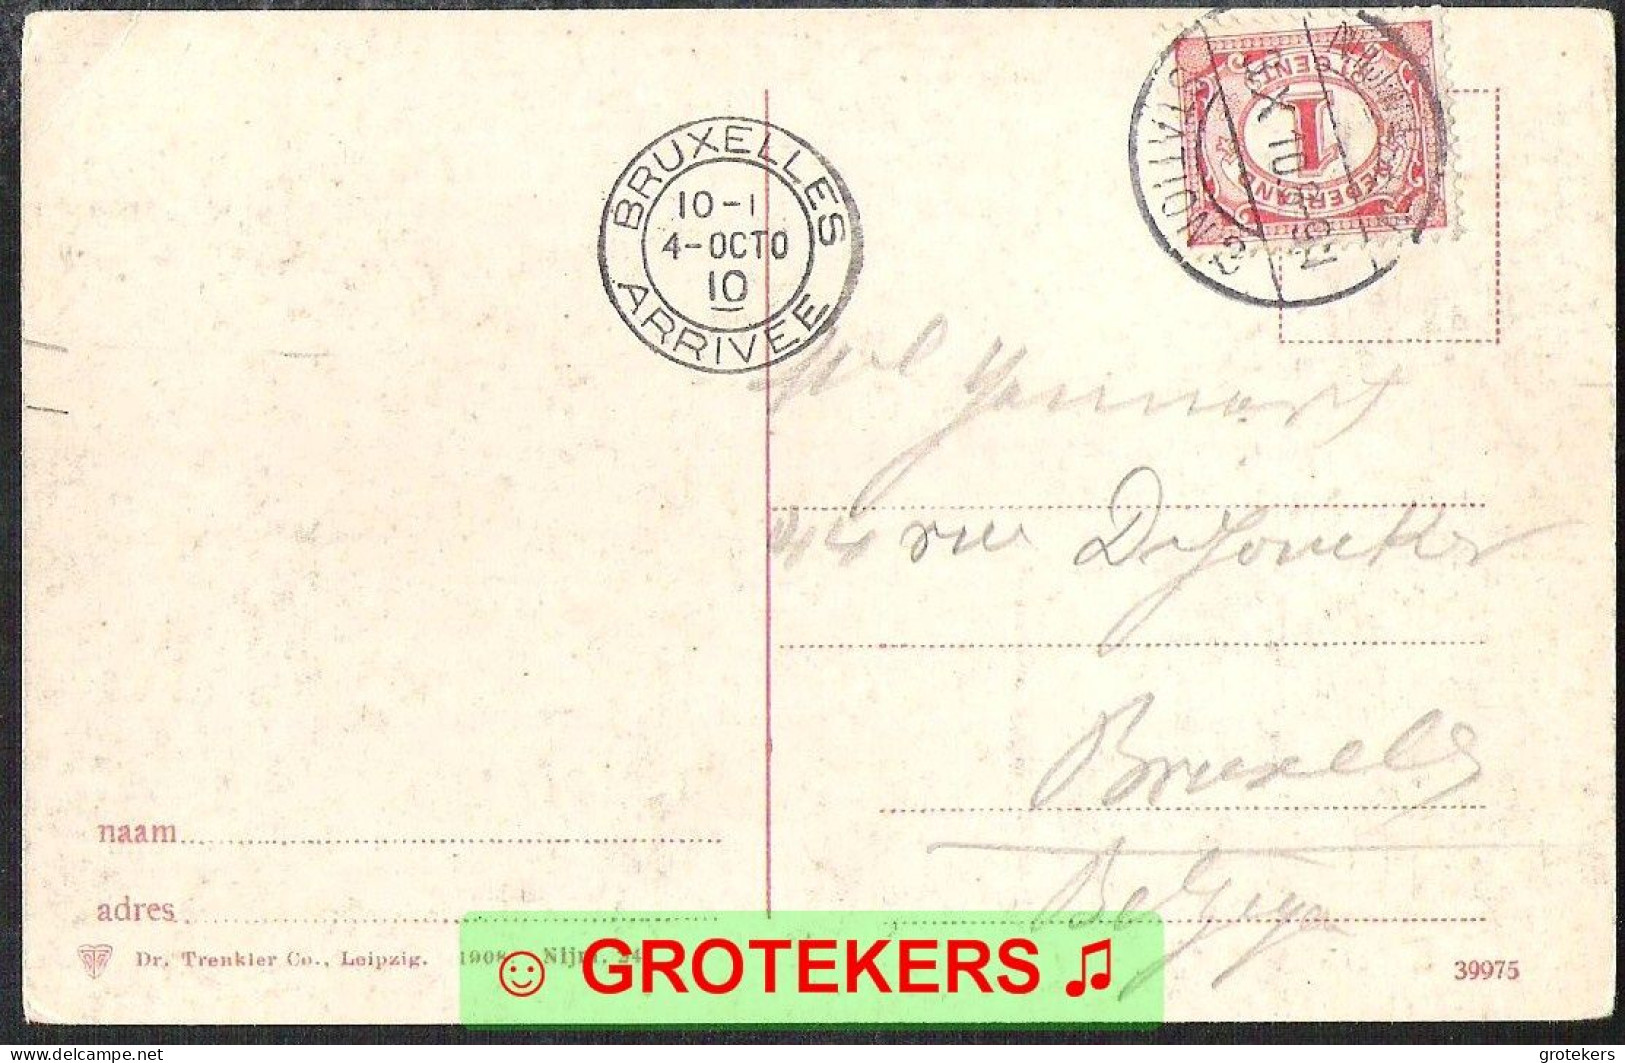 NIJMEGEN Kronenburgerpark 1910  Ed: Trenckler - Nijmegen